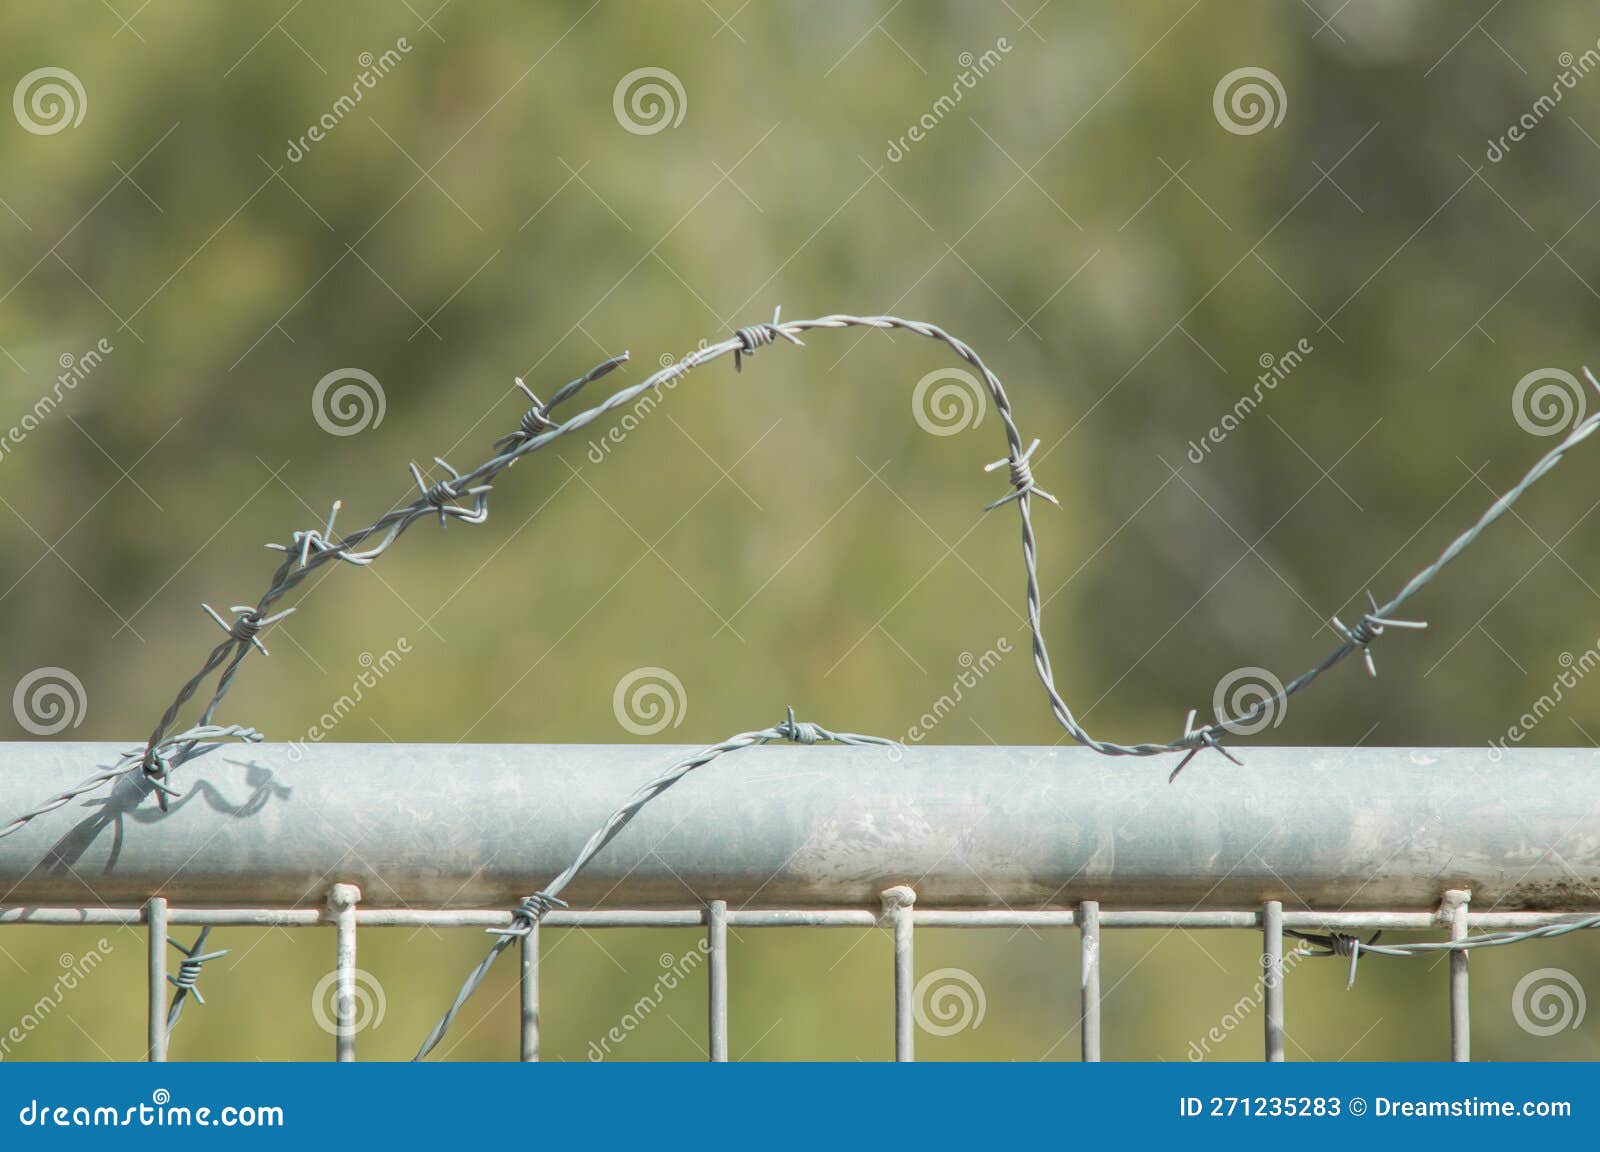 concertina on iron fence